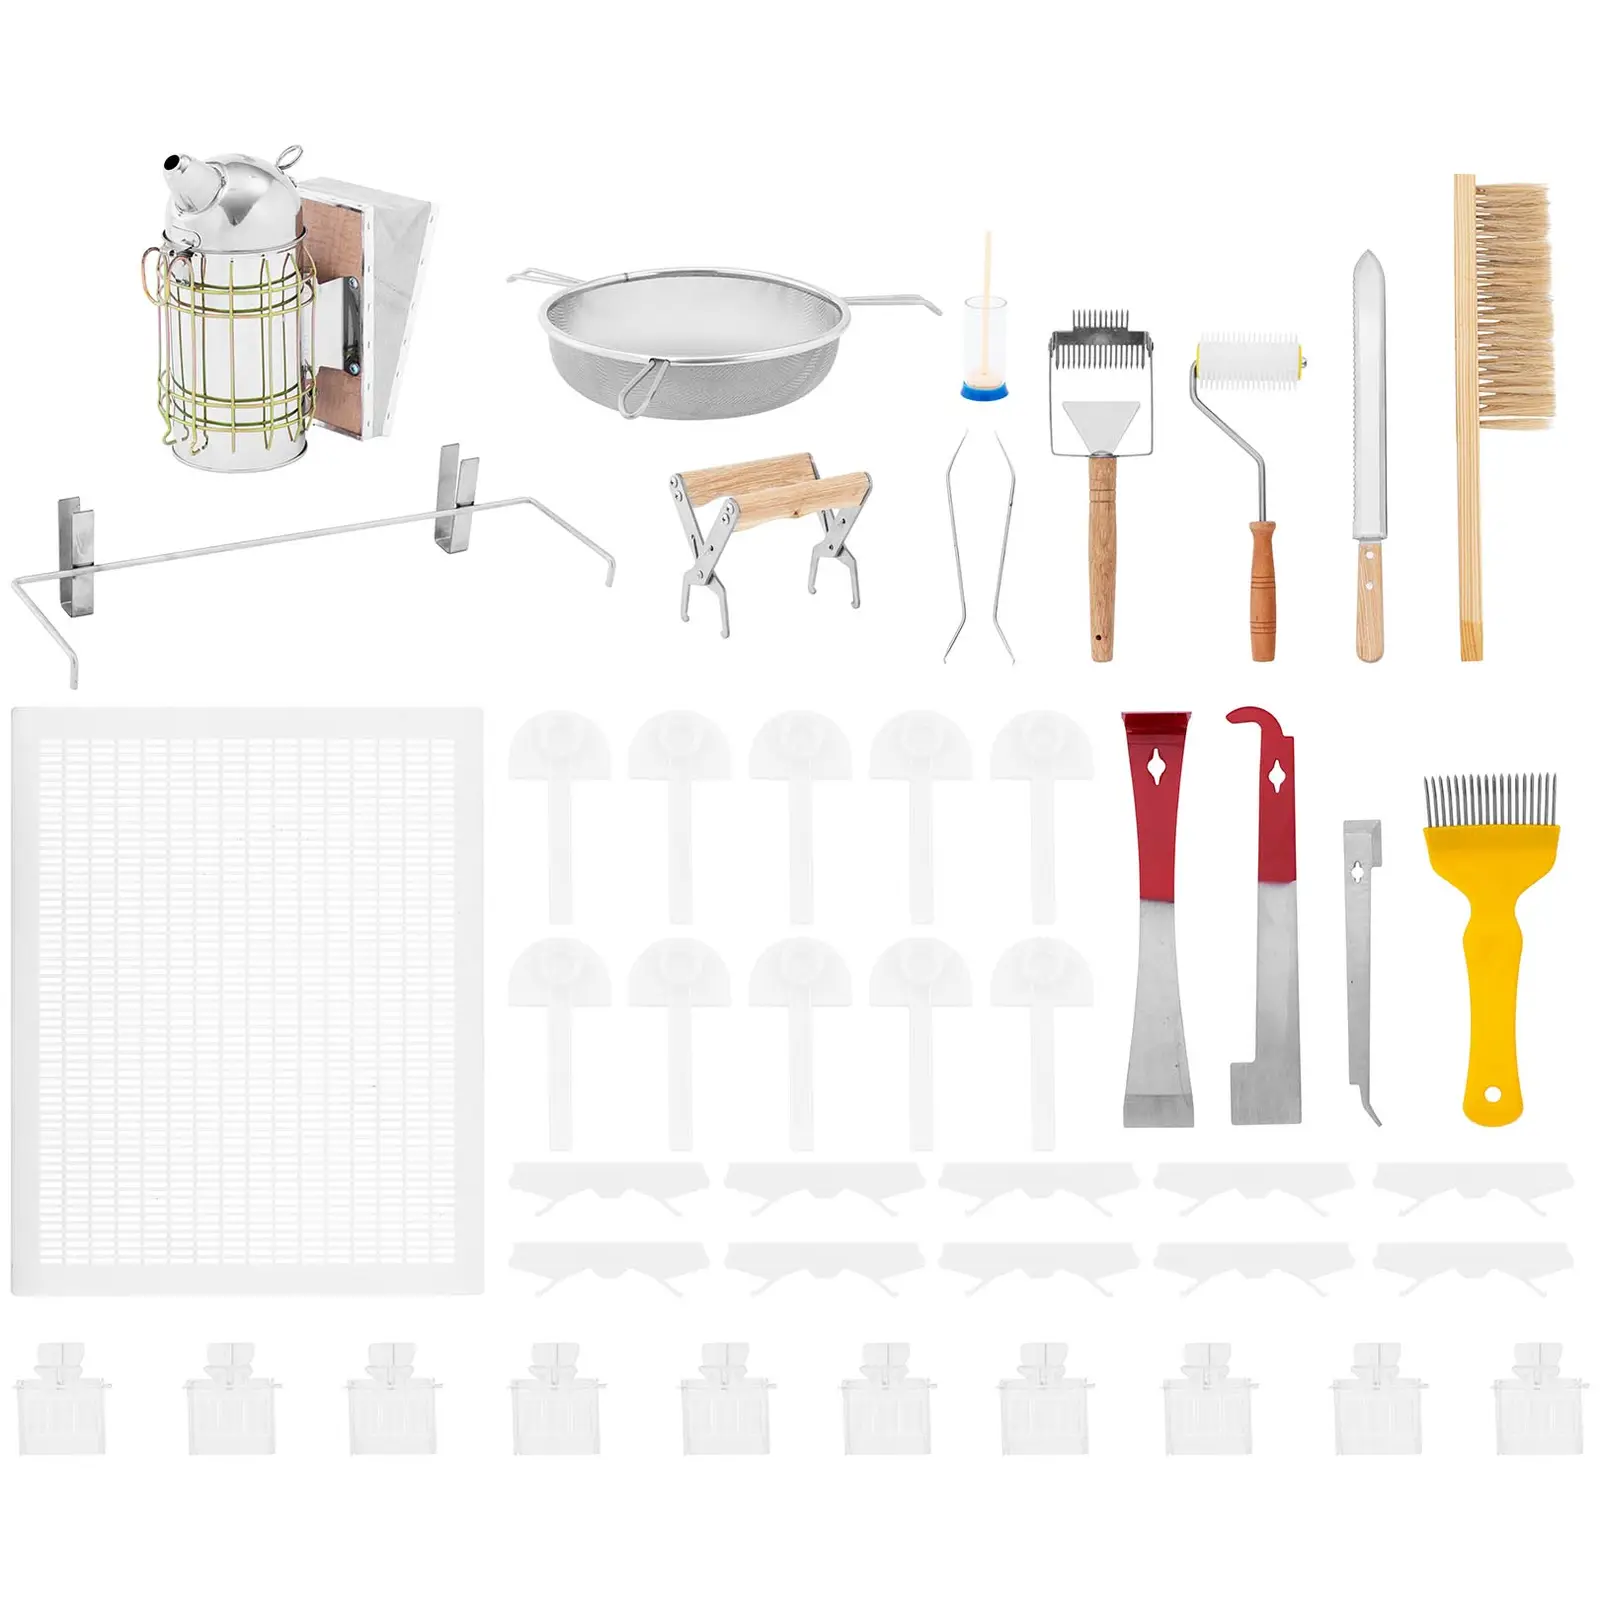 Beekeeping Starter Kit - 37 pcs - Smoker - Hive Chisel - Frame Holder - Honey Knife - Insect Traps